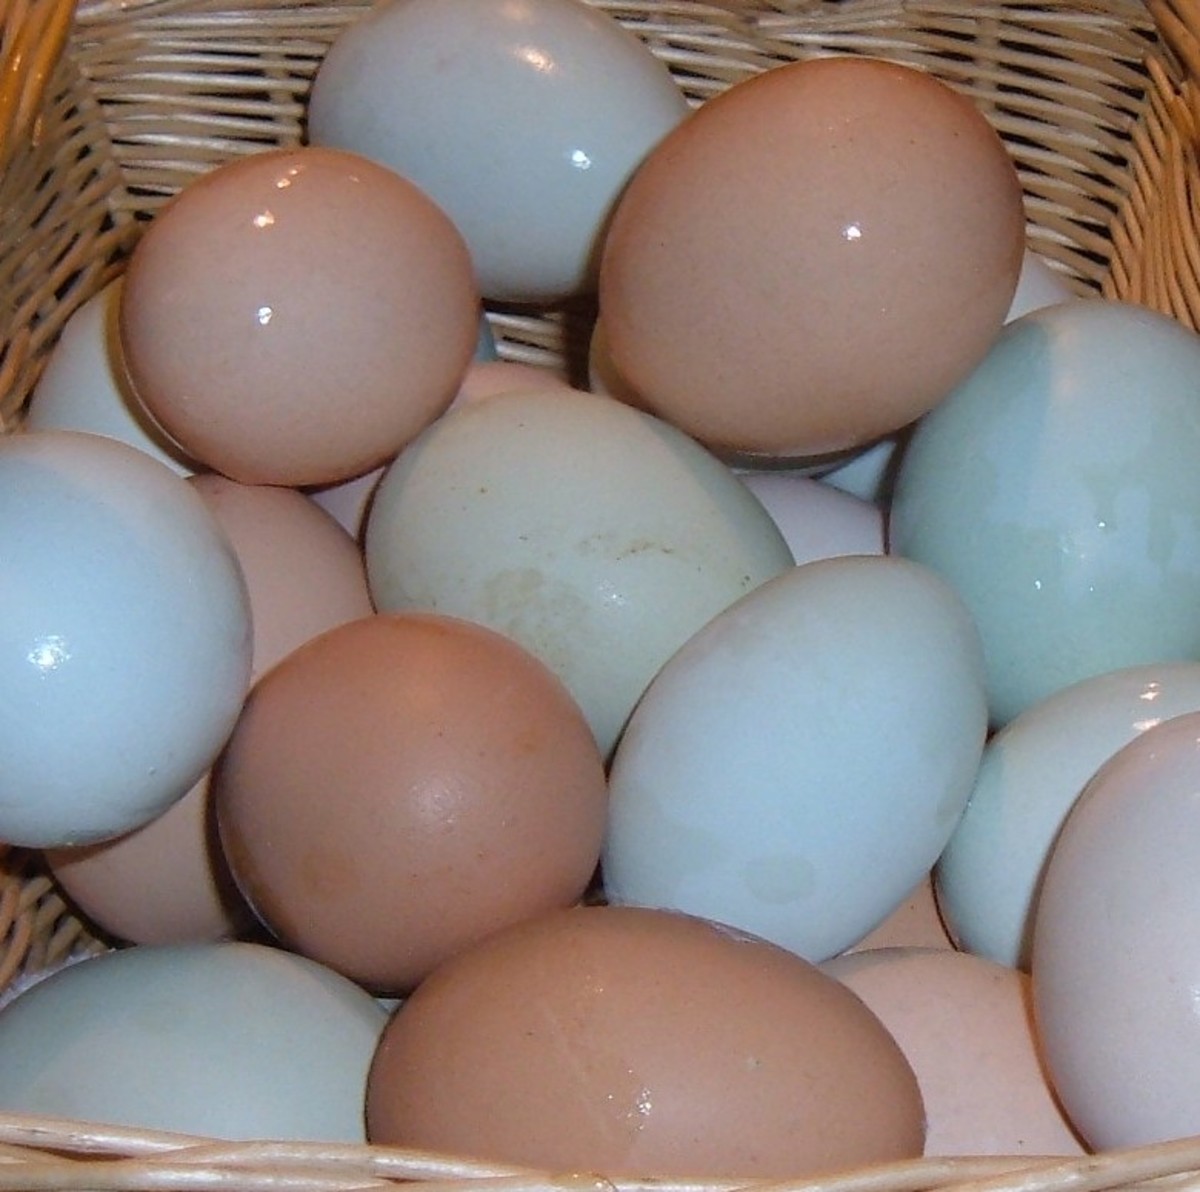 Backyard Chicken Eggs